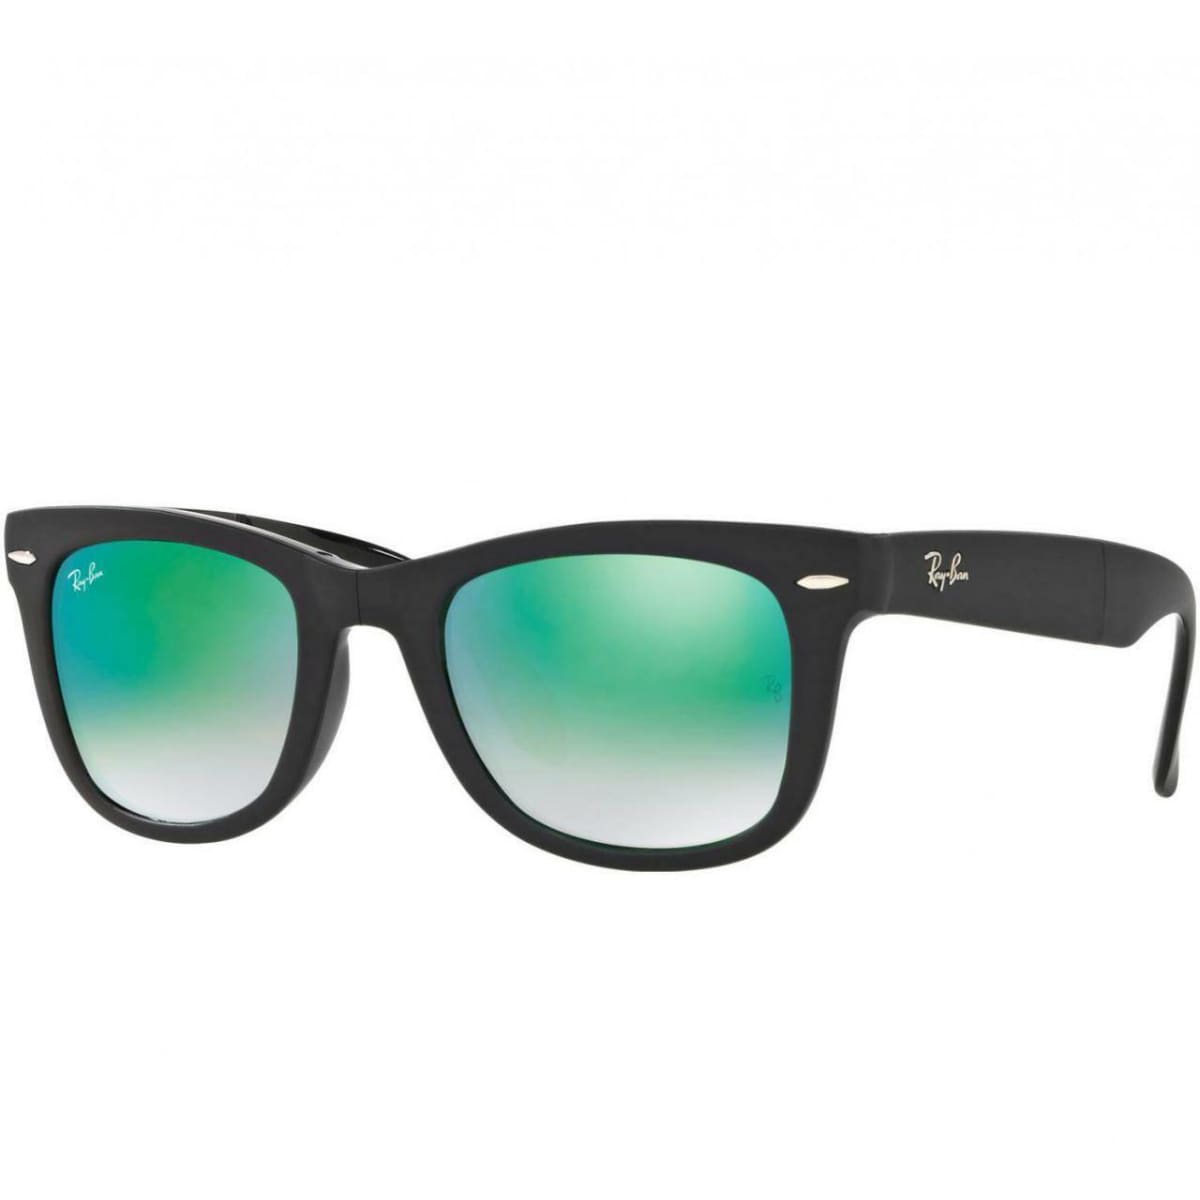 Ray-Ban RB4105-60694J Wayfarer Black Square Green Gradient Flash Lens Sunglasses - On sale